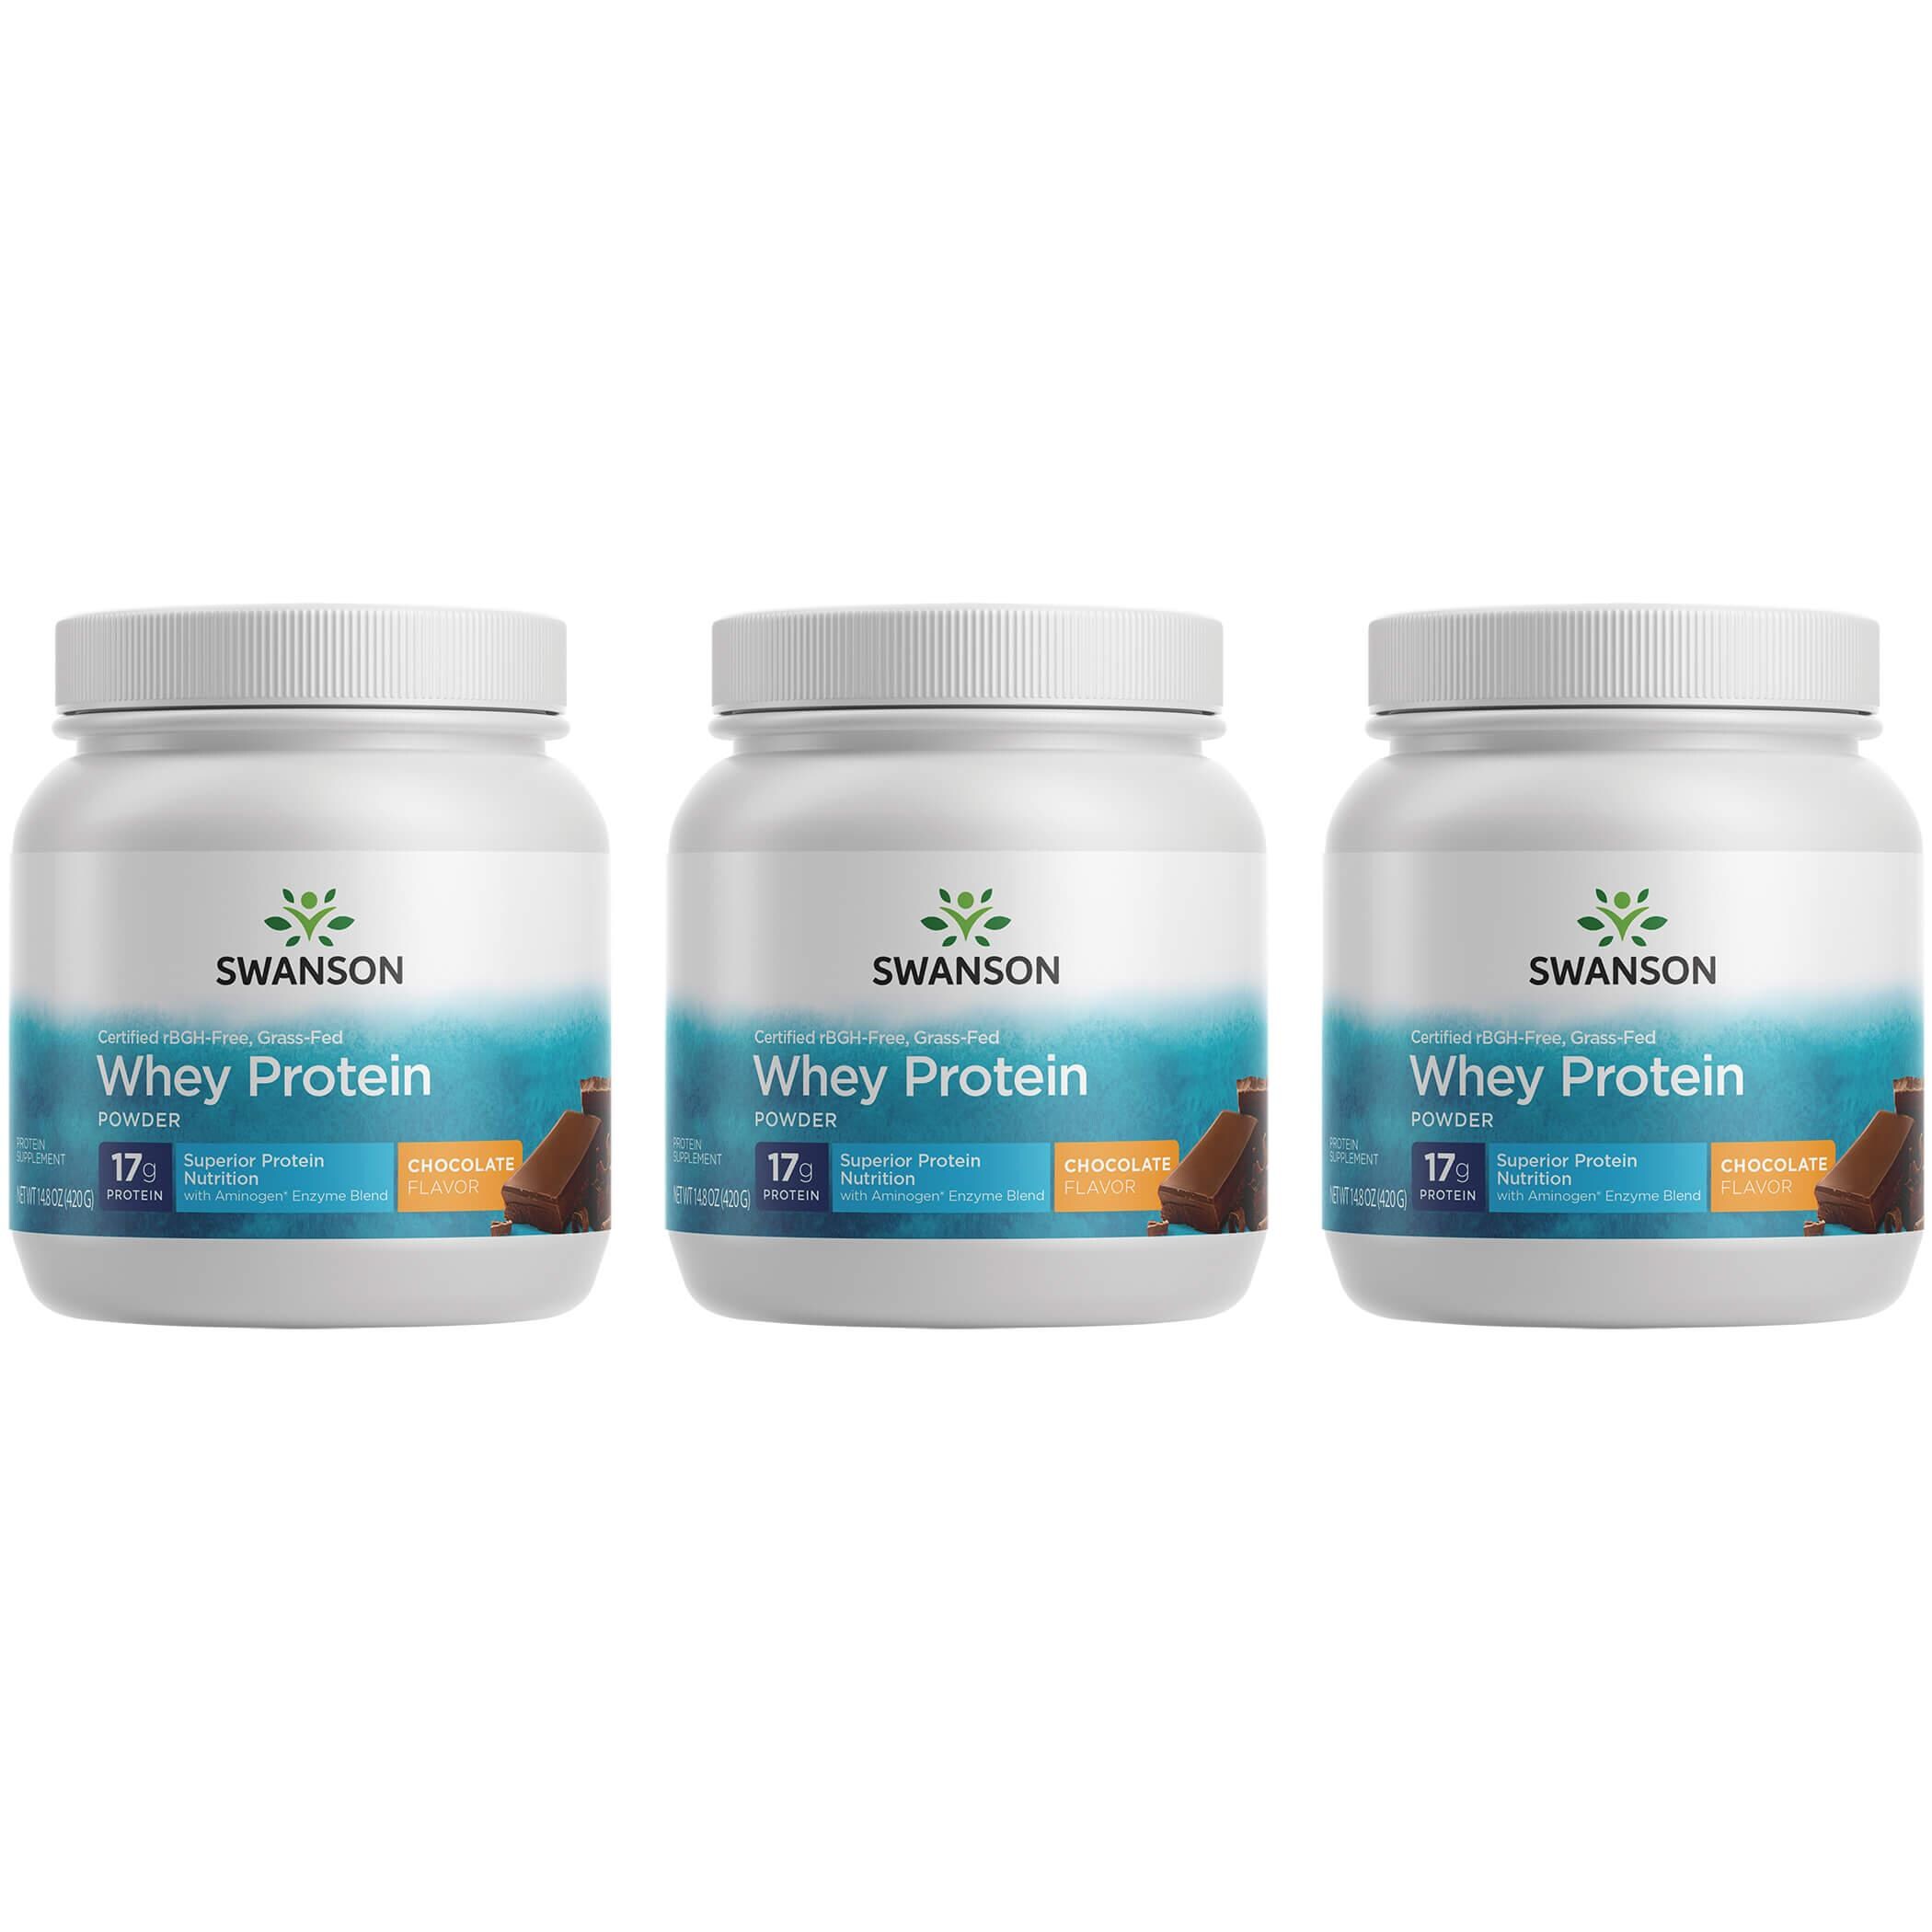 Swanson Ultra Certified rbgh-Free Grass-Fed Whey Protein Powder - Chocolate 3 Pack 14.8 oz Powder